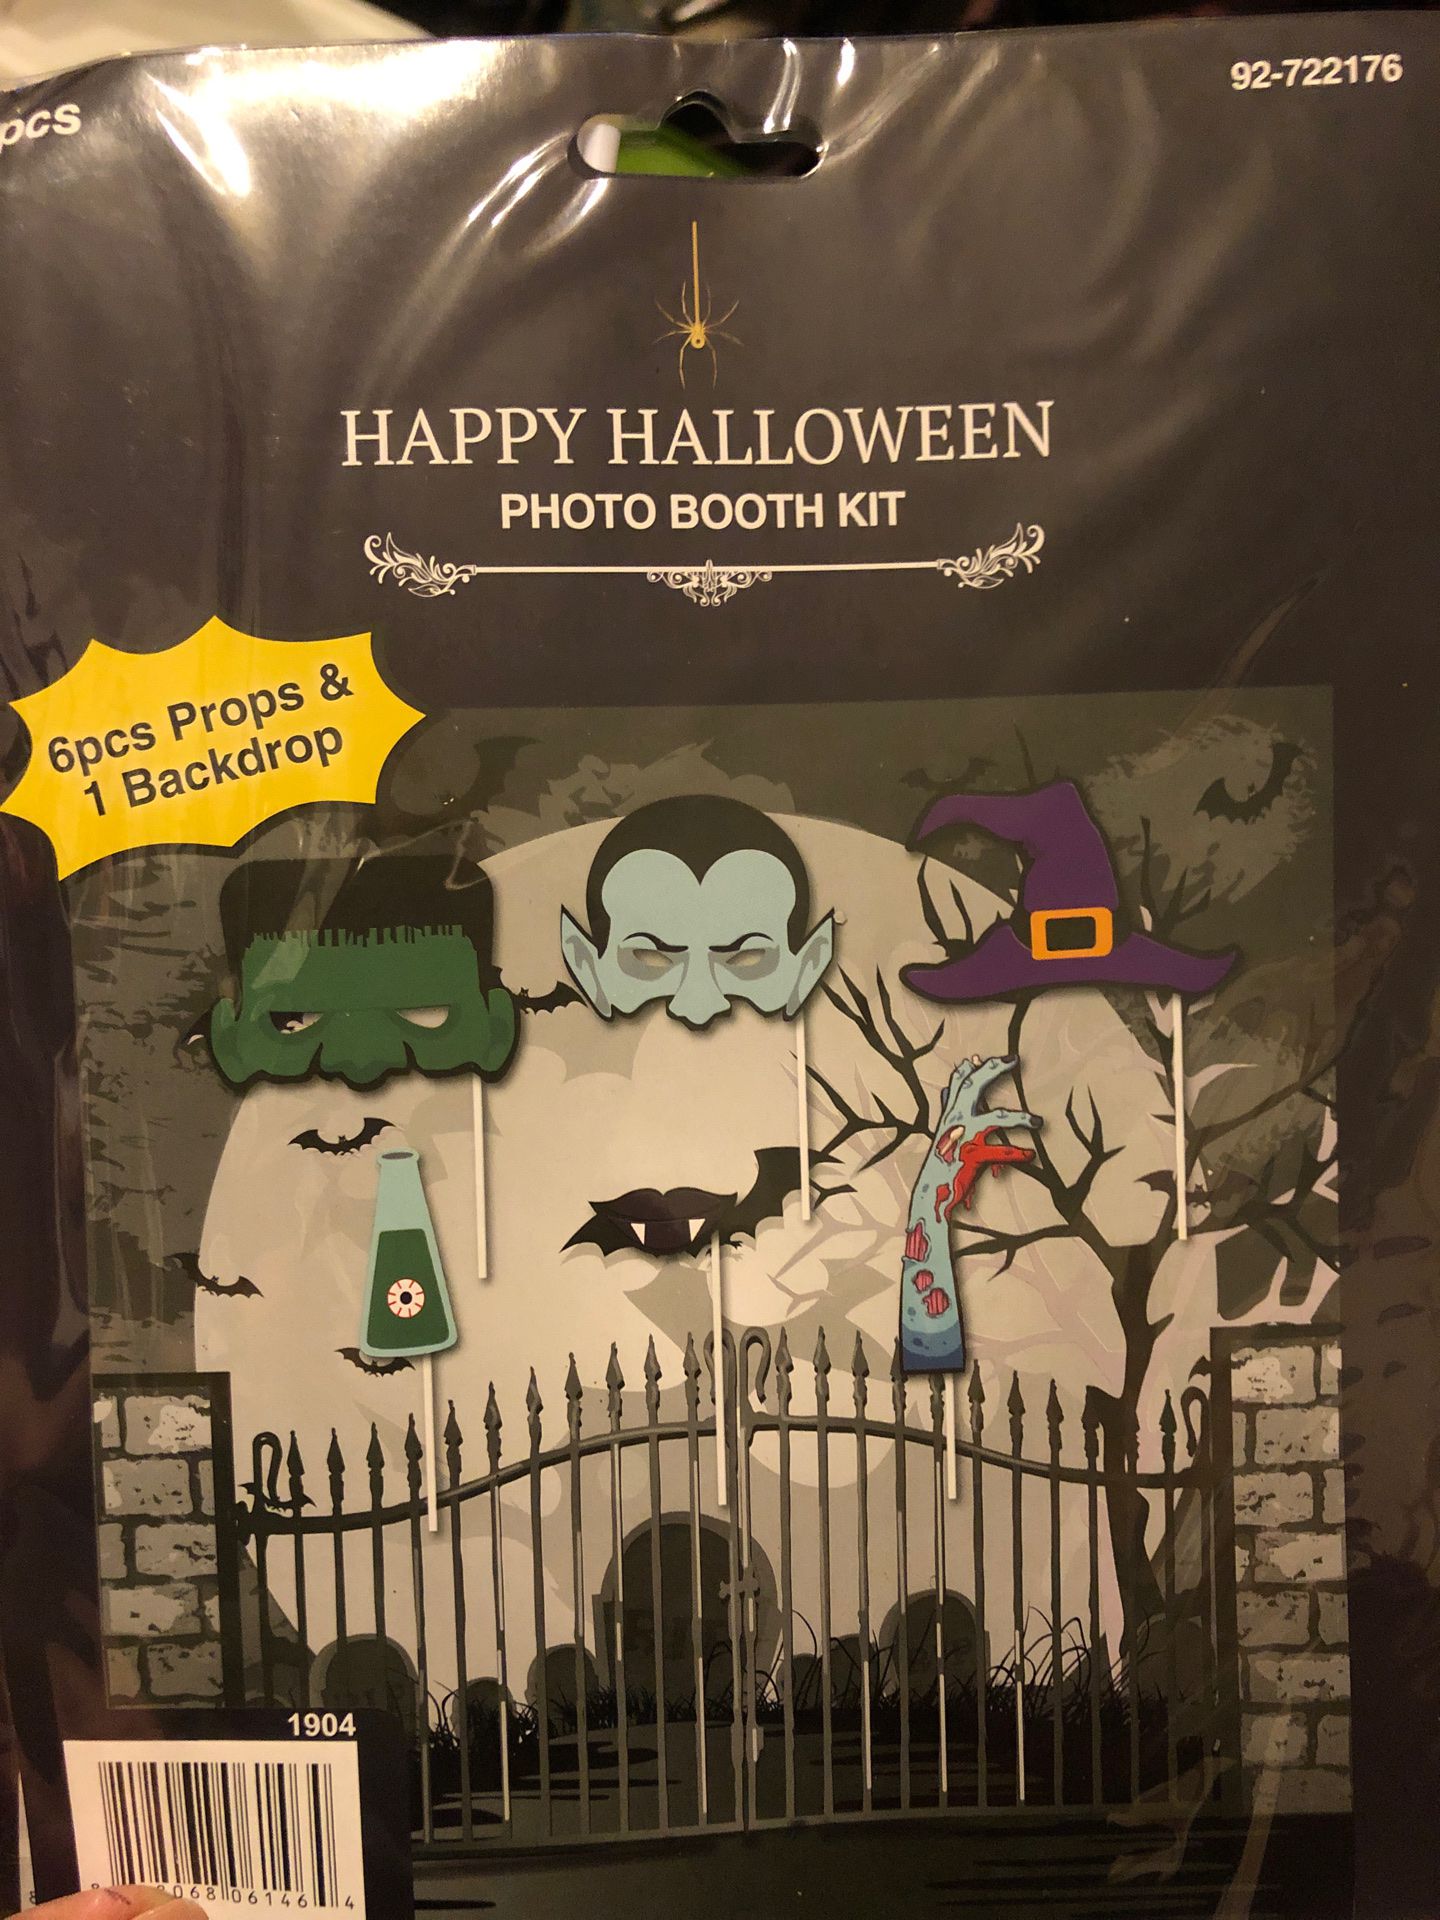 Halloween photo booth kit 6pcs props & 1 back drop